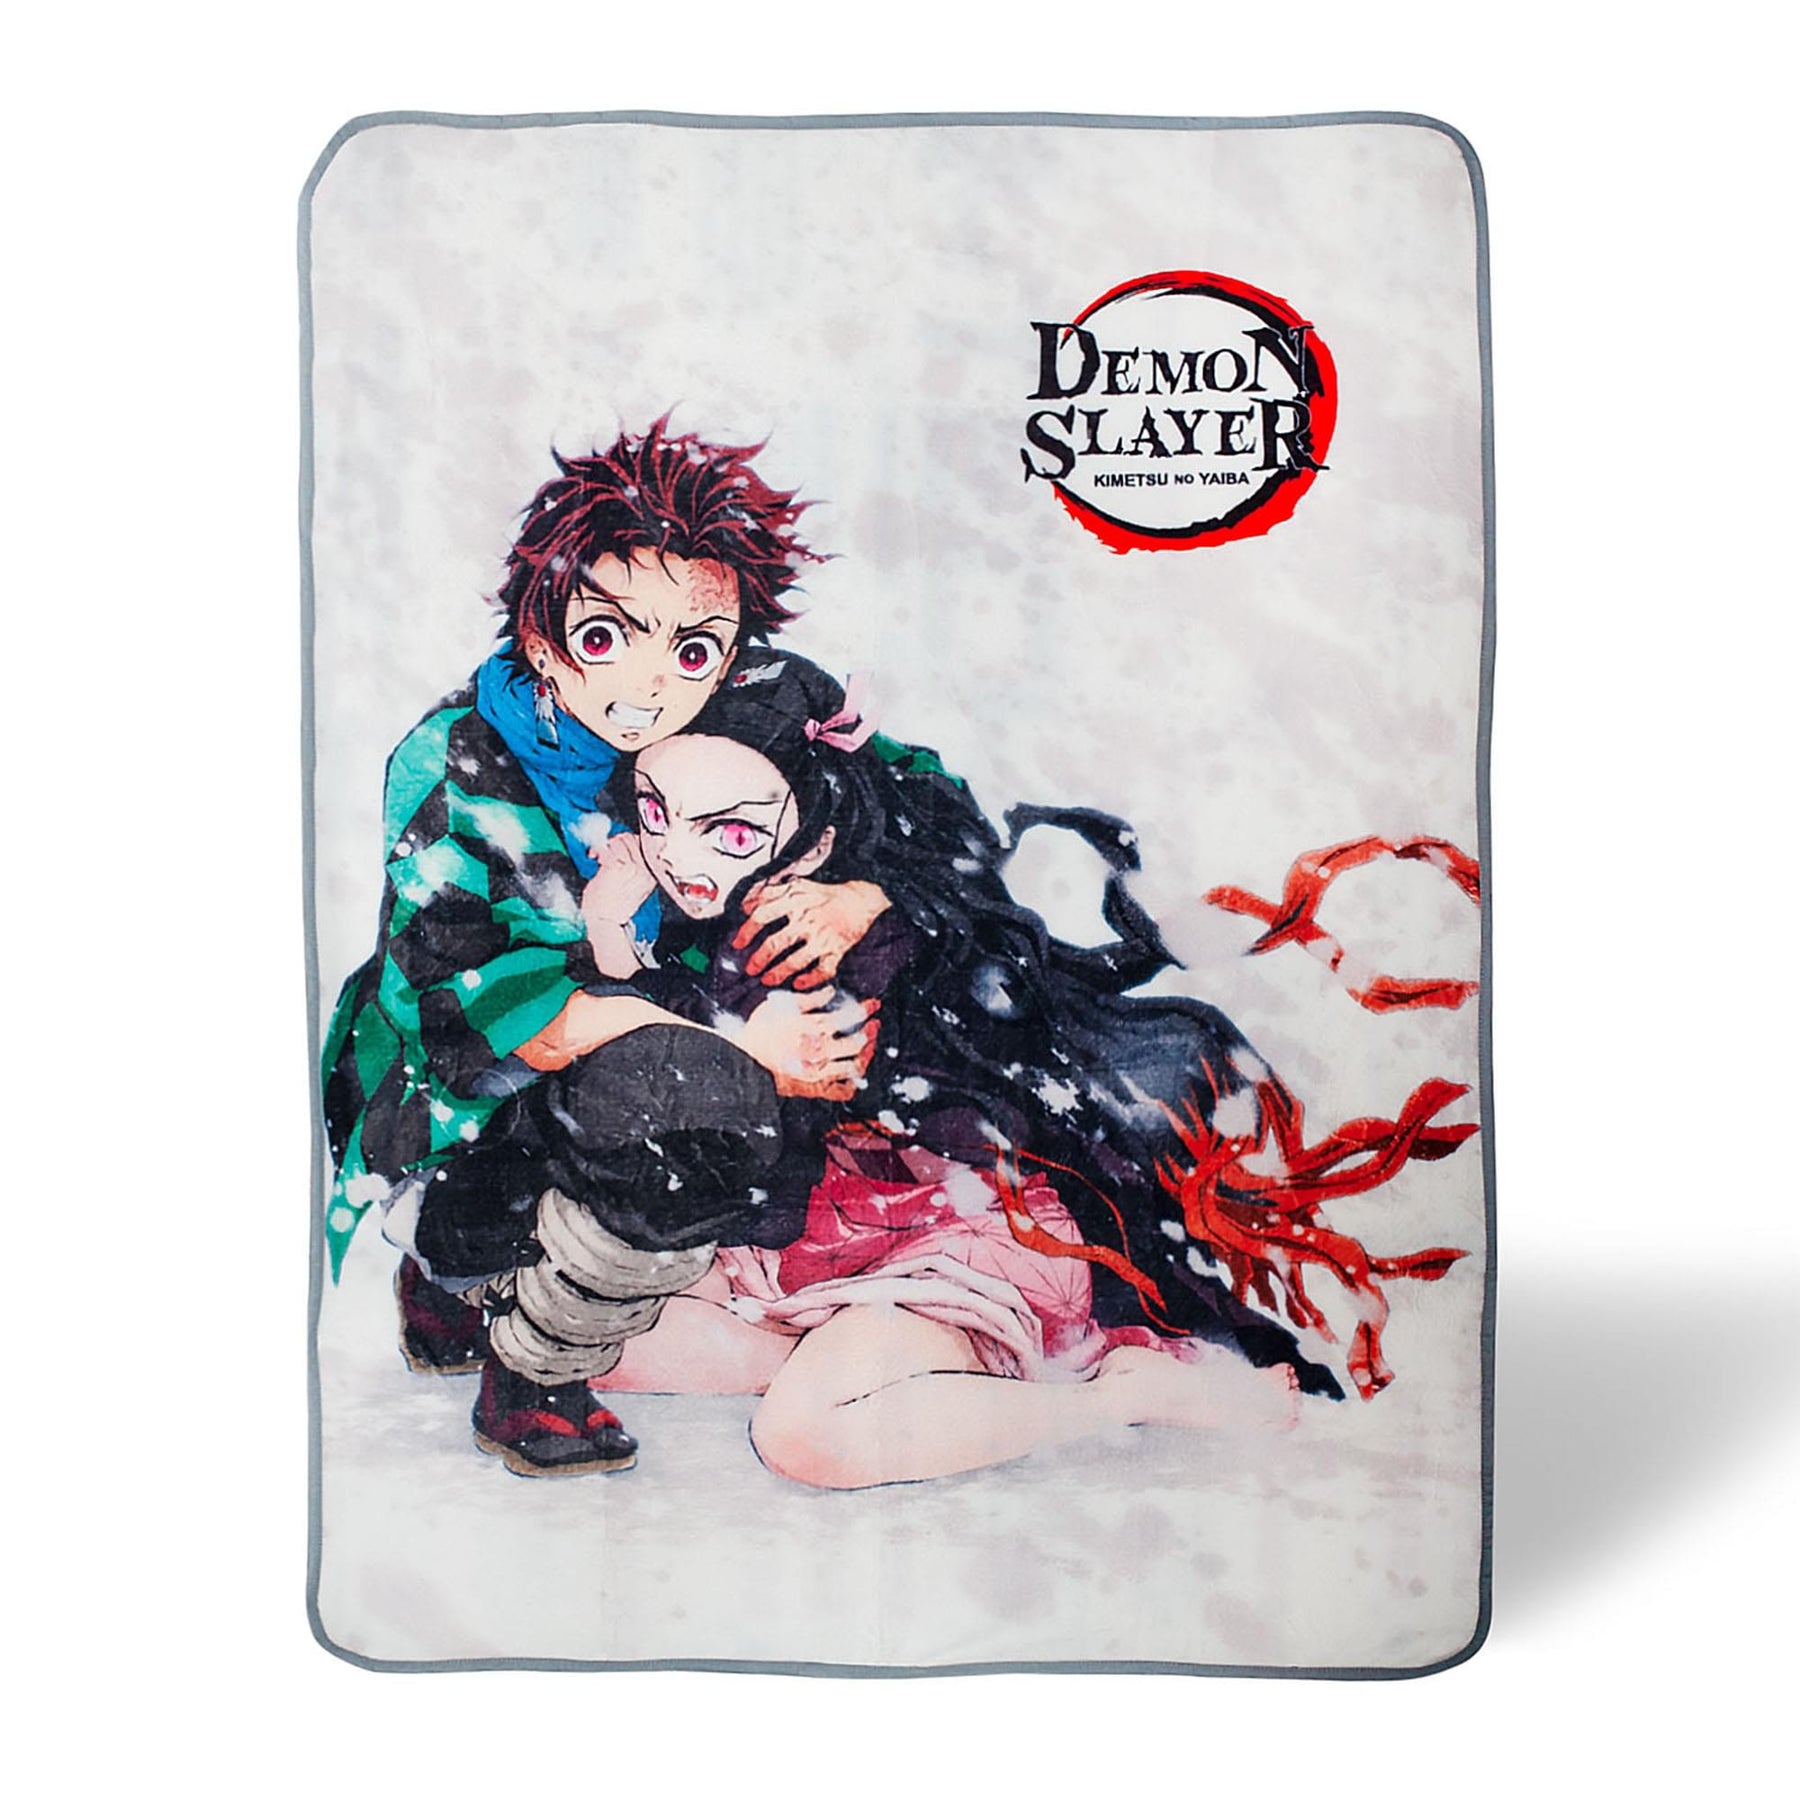 Demon Slayer Tanjiro & Nezuko Fleece Throw Blanket | 45 x 60 Inches